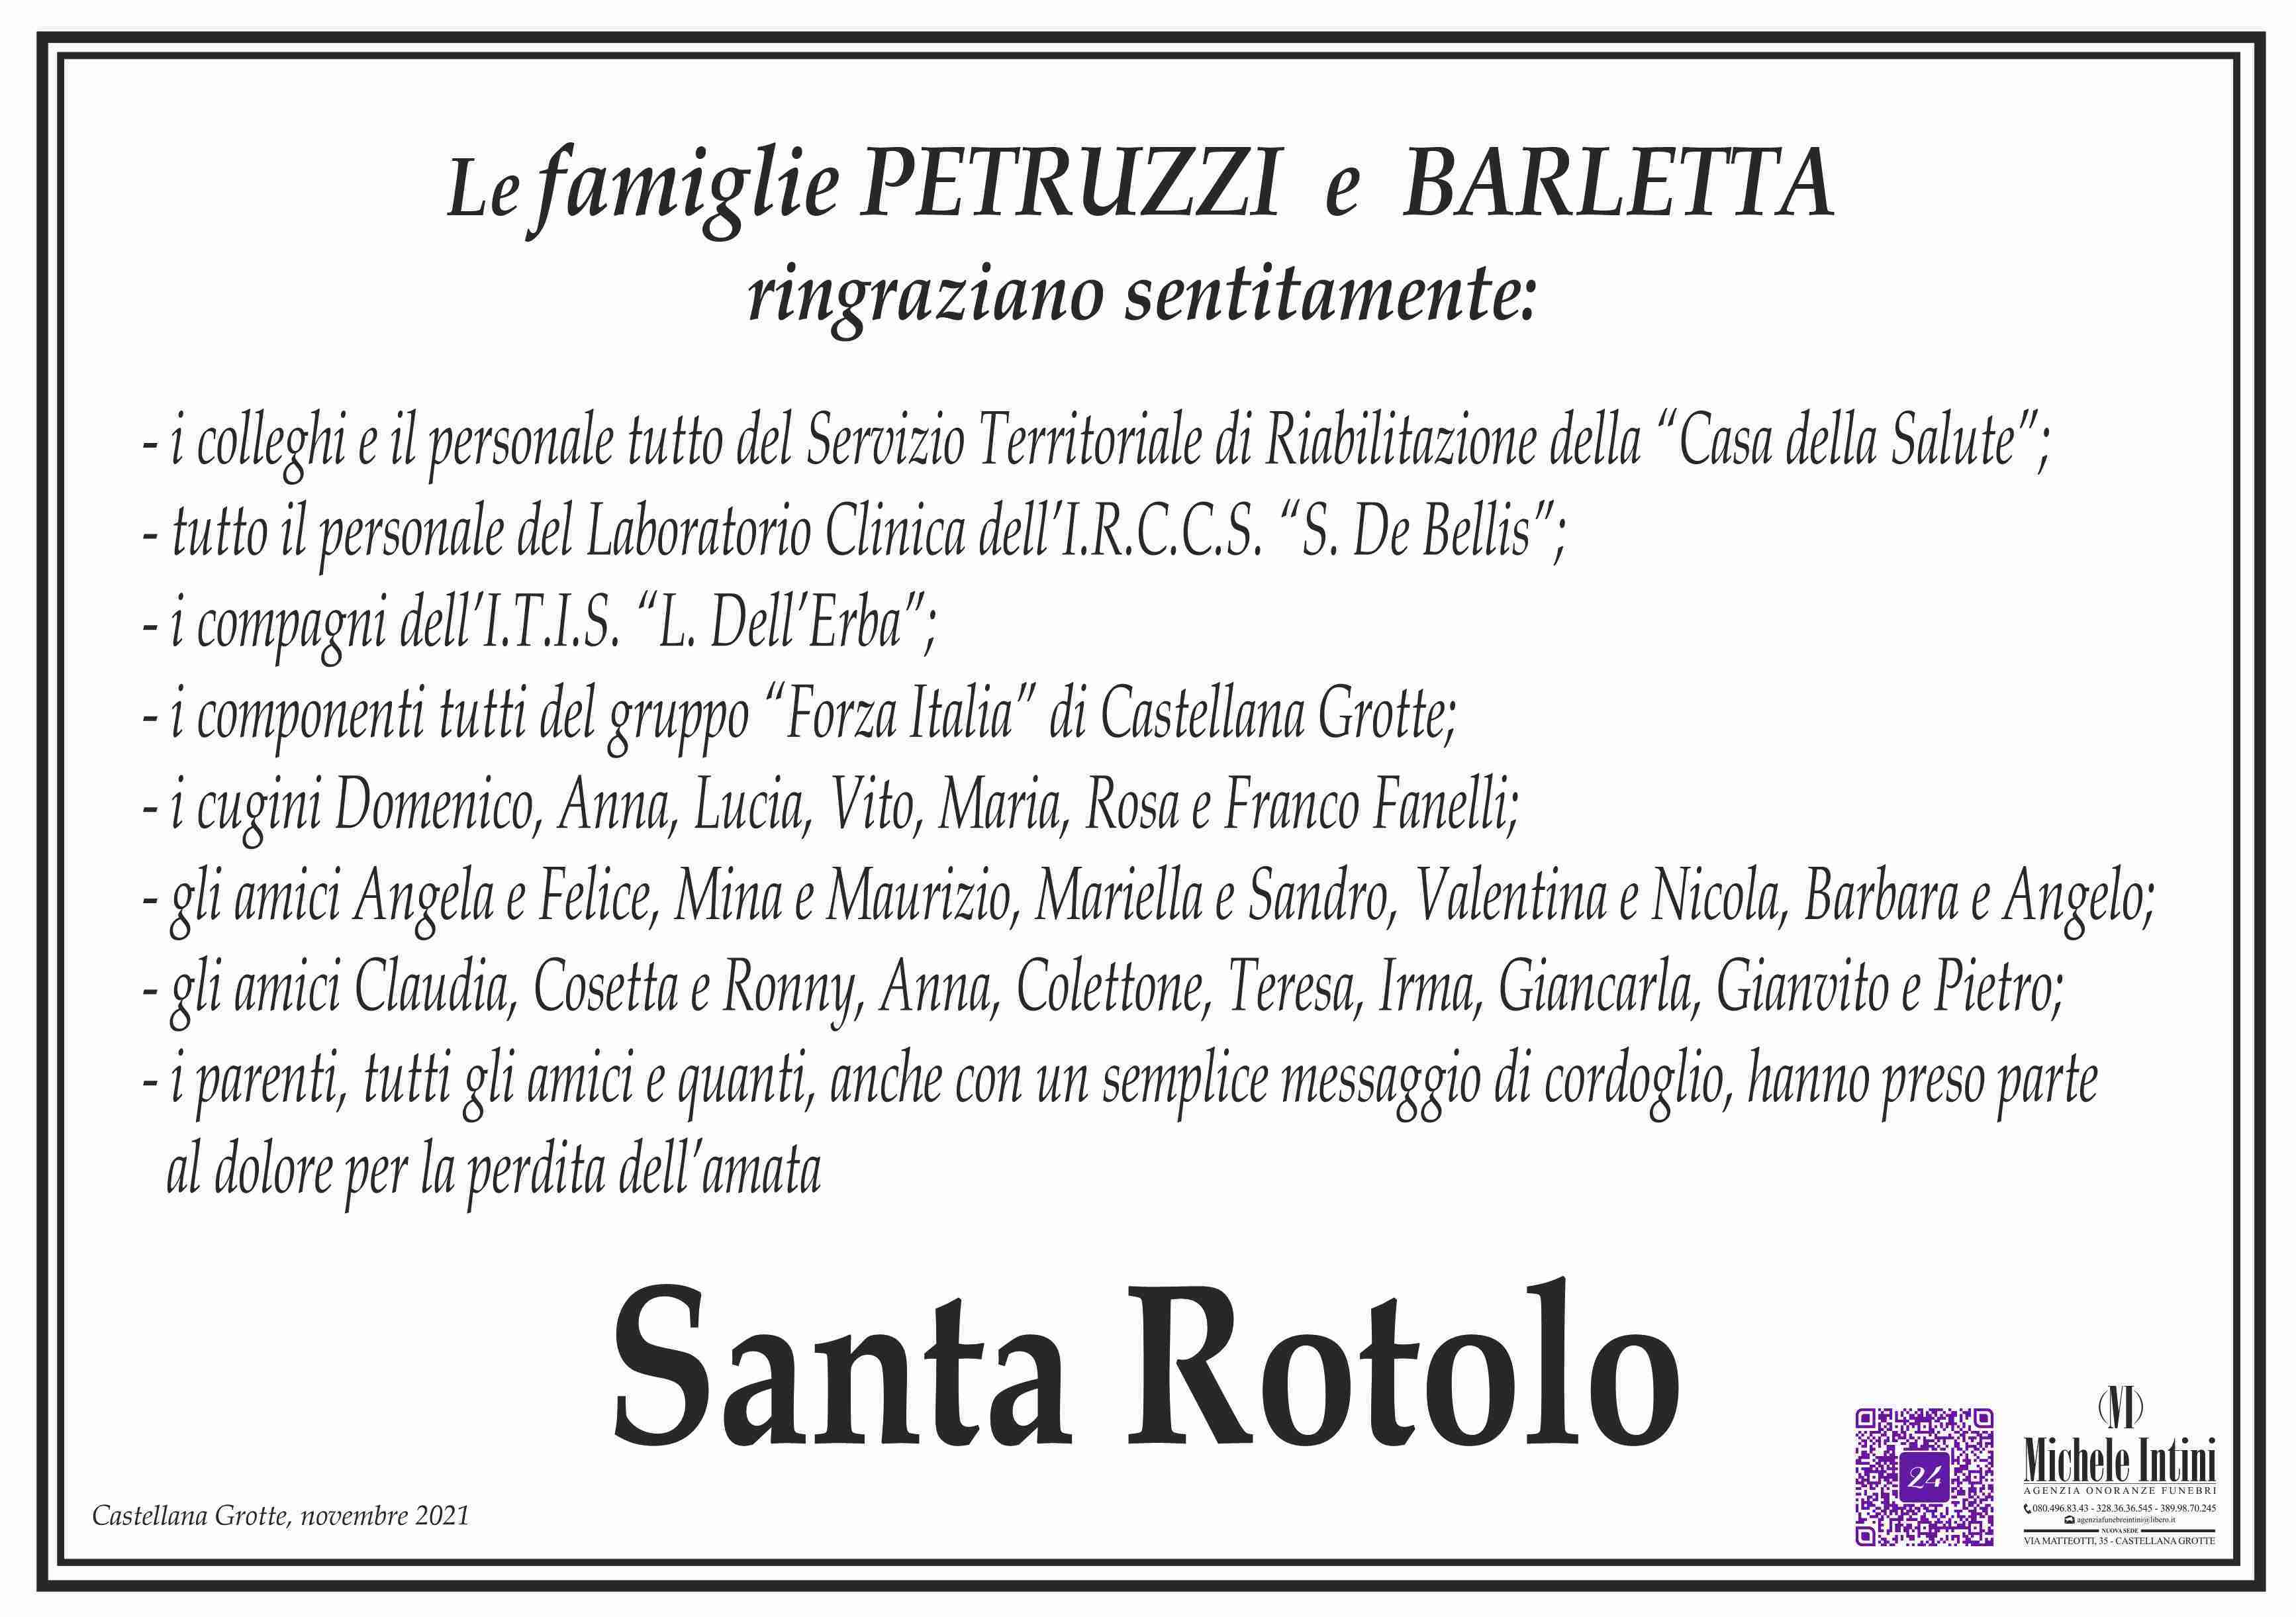 Santa Rotolo